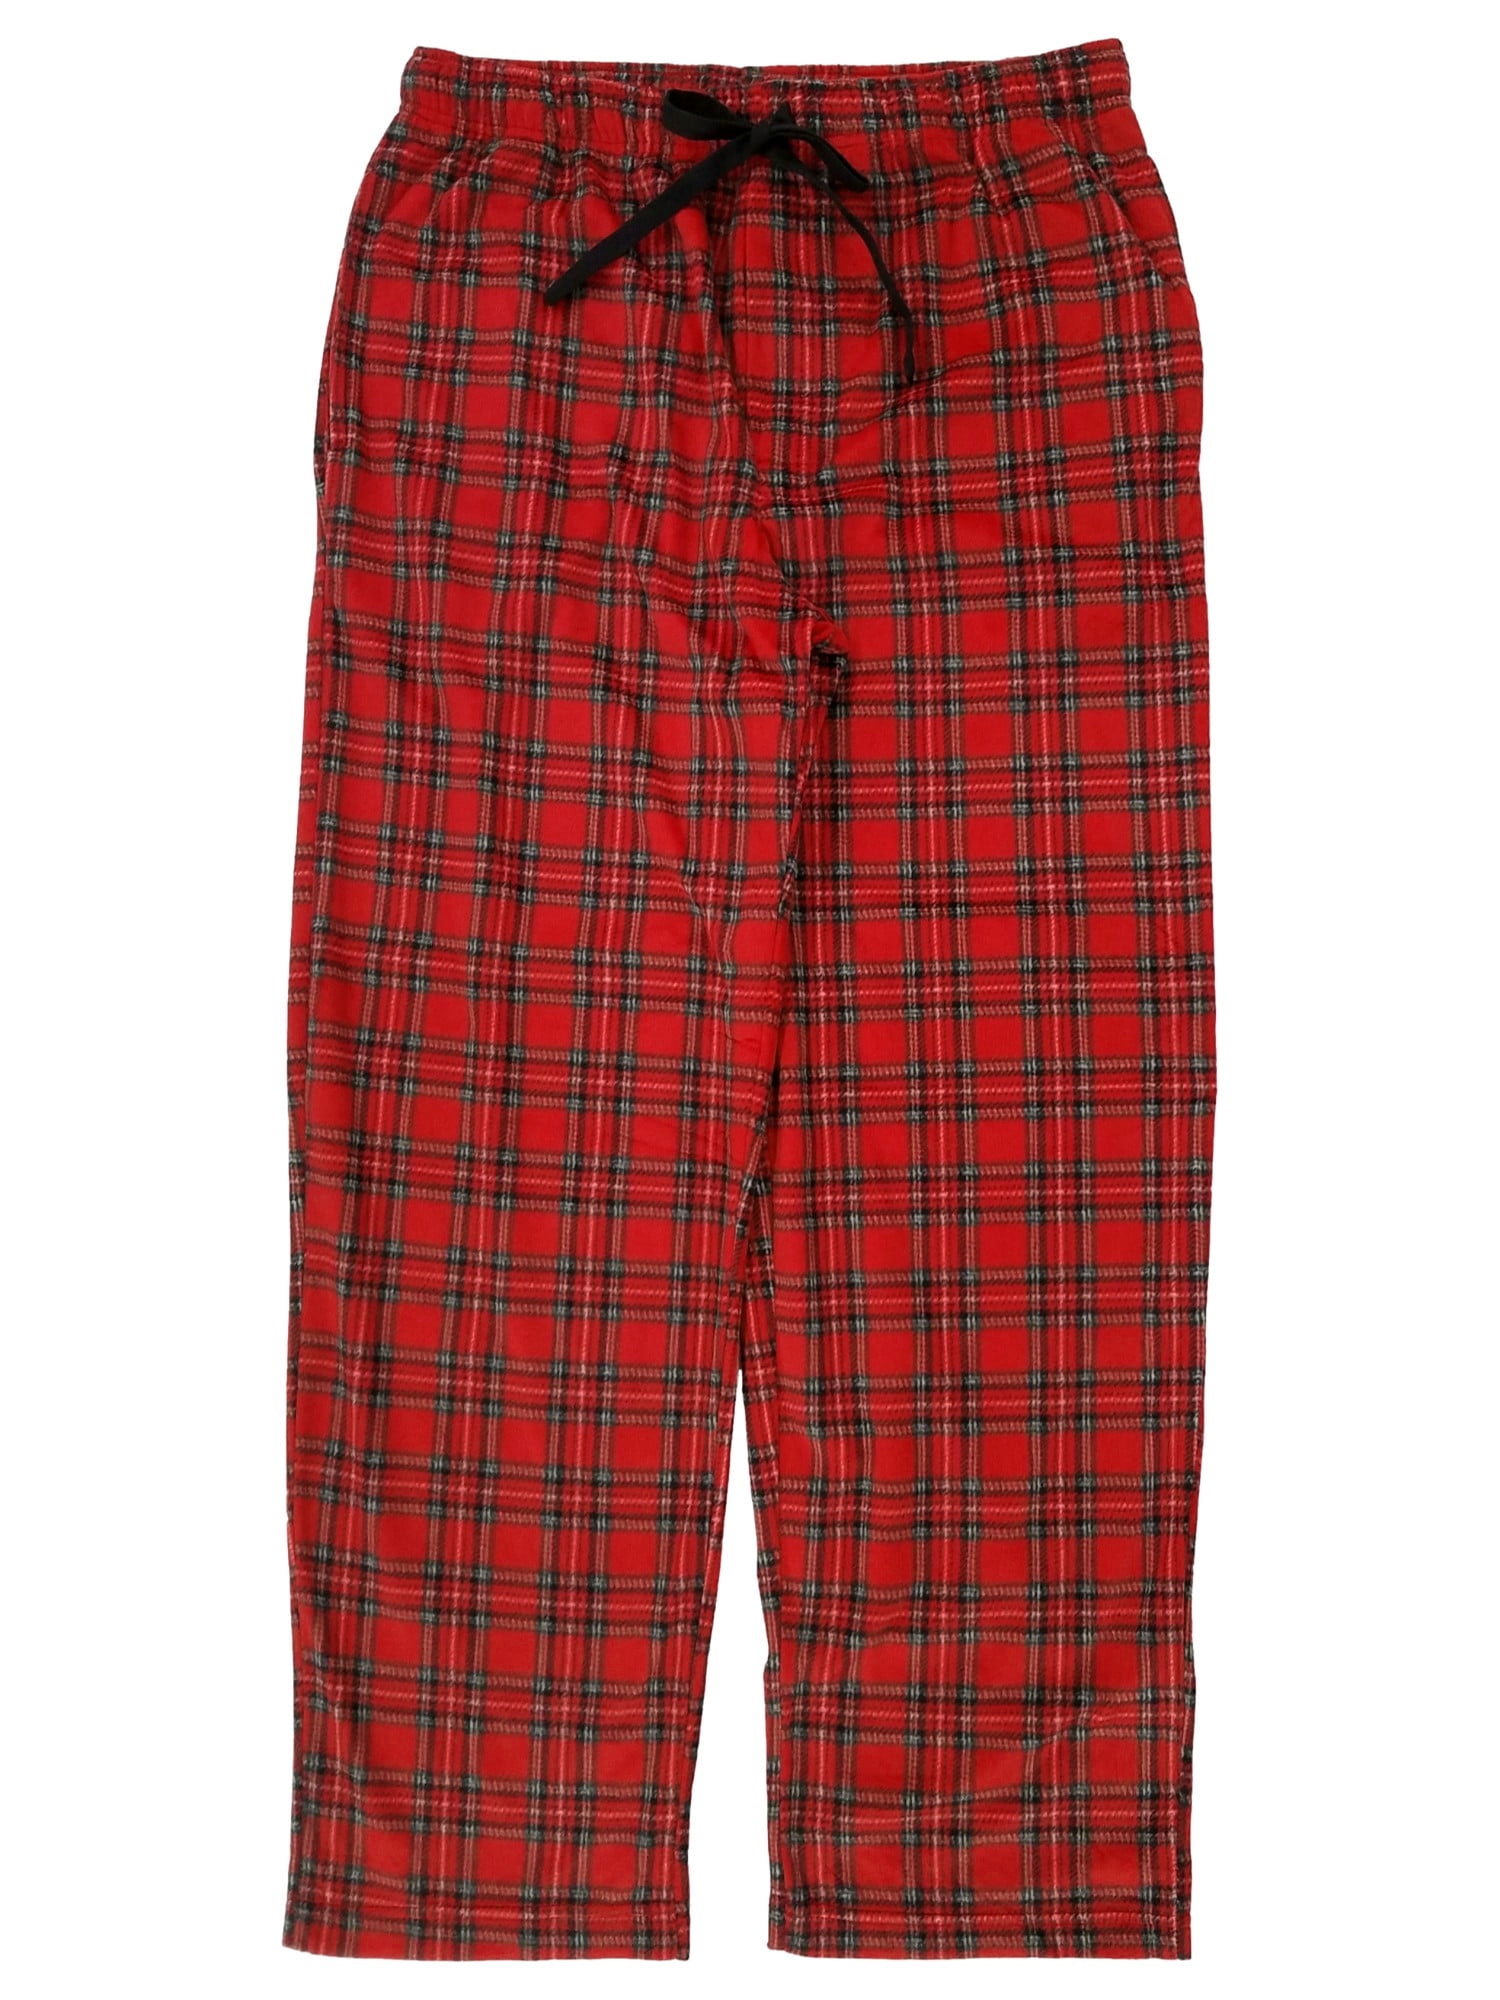 St. Johns Bay Mens Red Tartan Plaid Fleece Sleep Pants Pajama Bottoms Medium